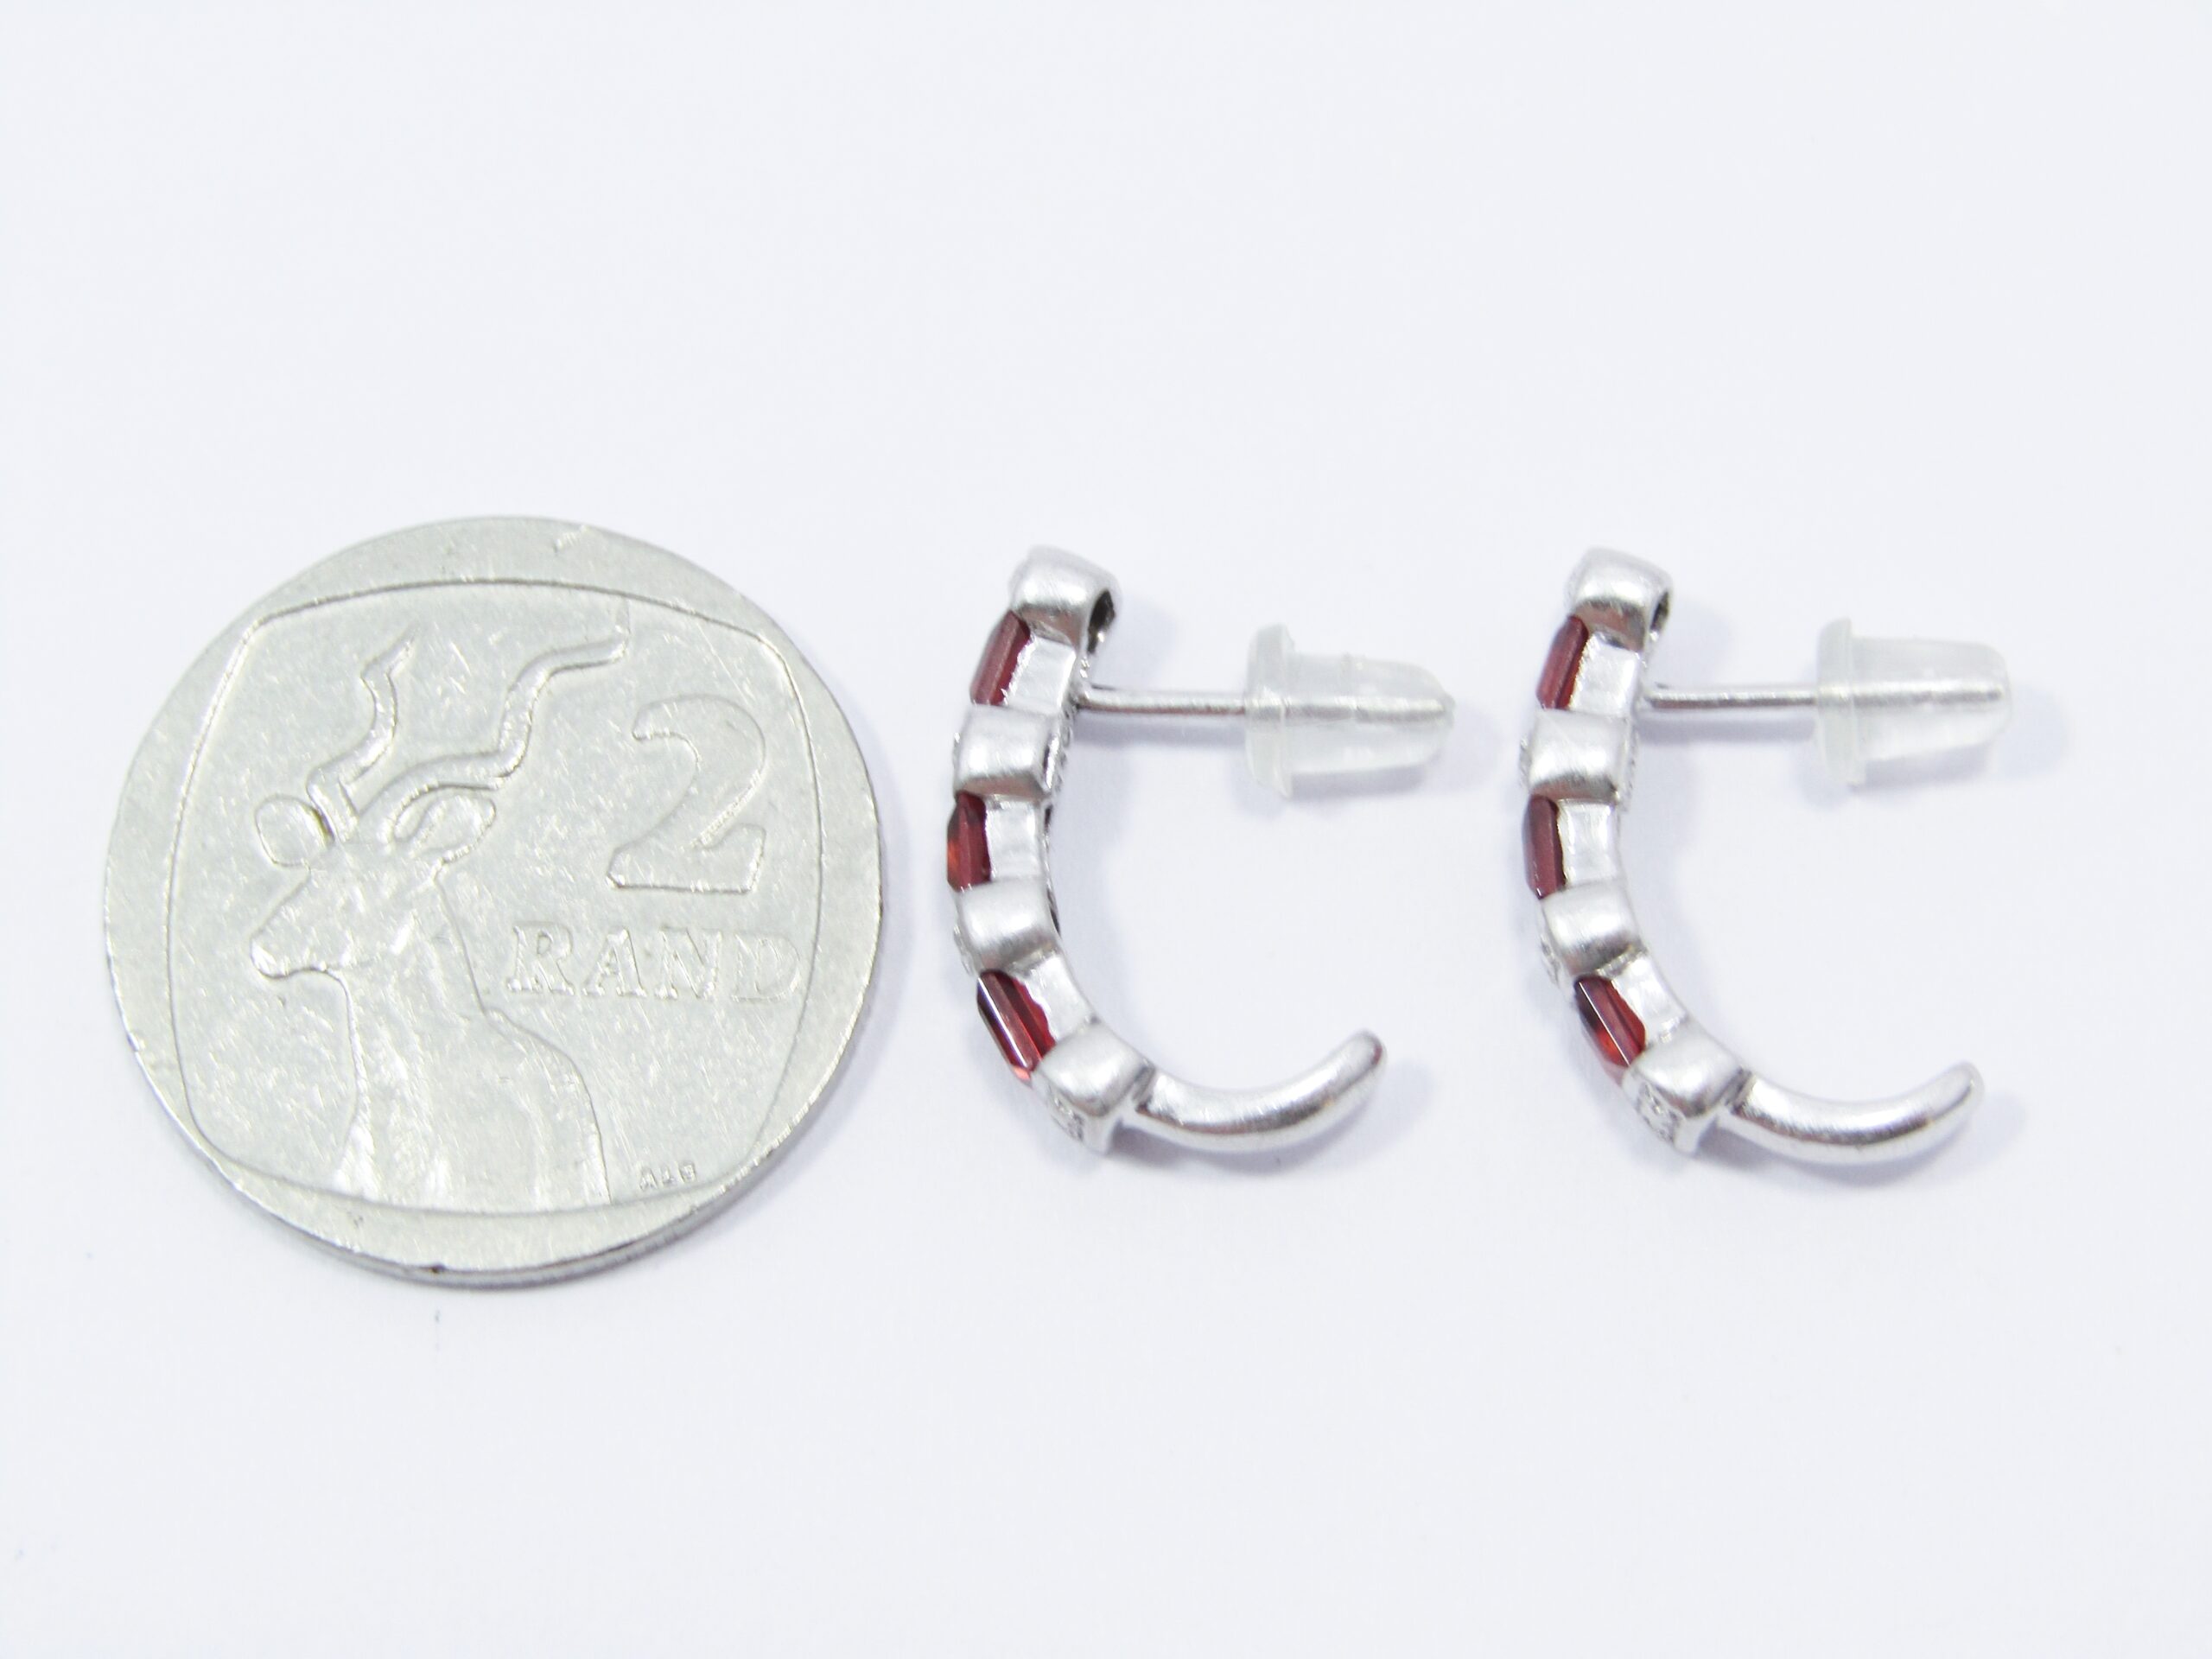 A Gorgeous pair of Garnet earrings in Sterling Silver